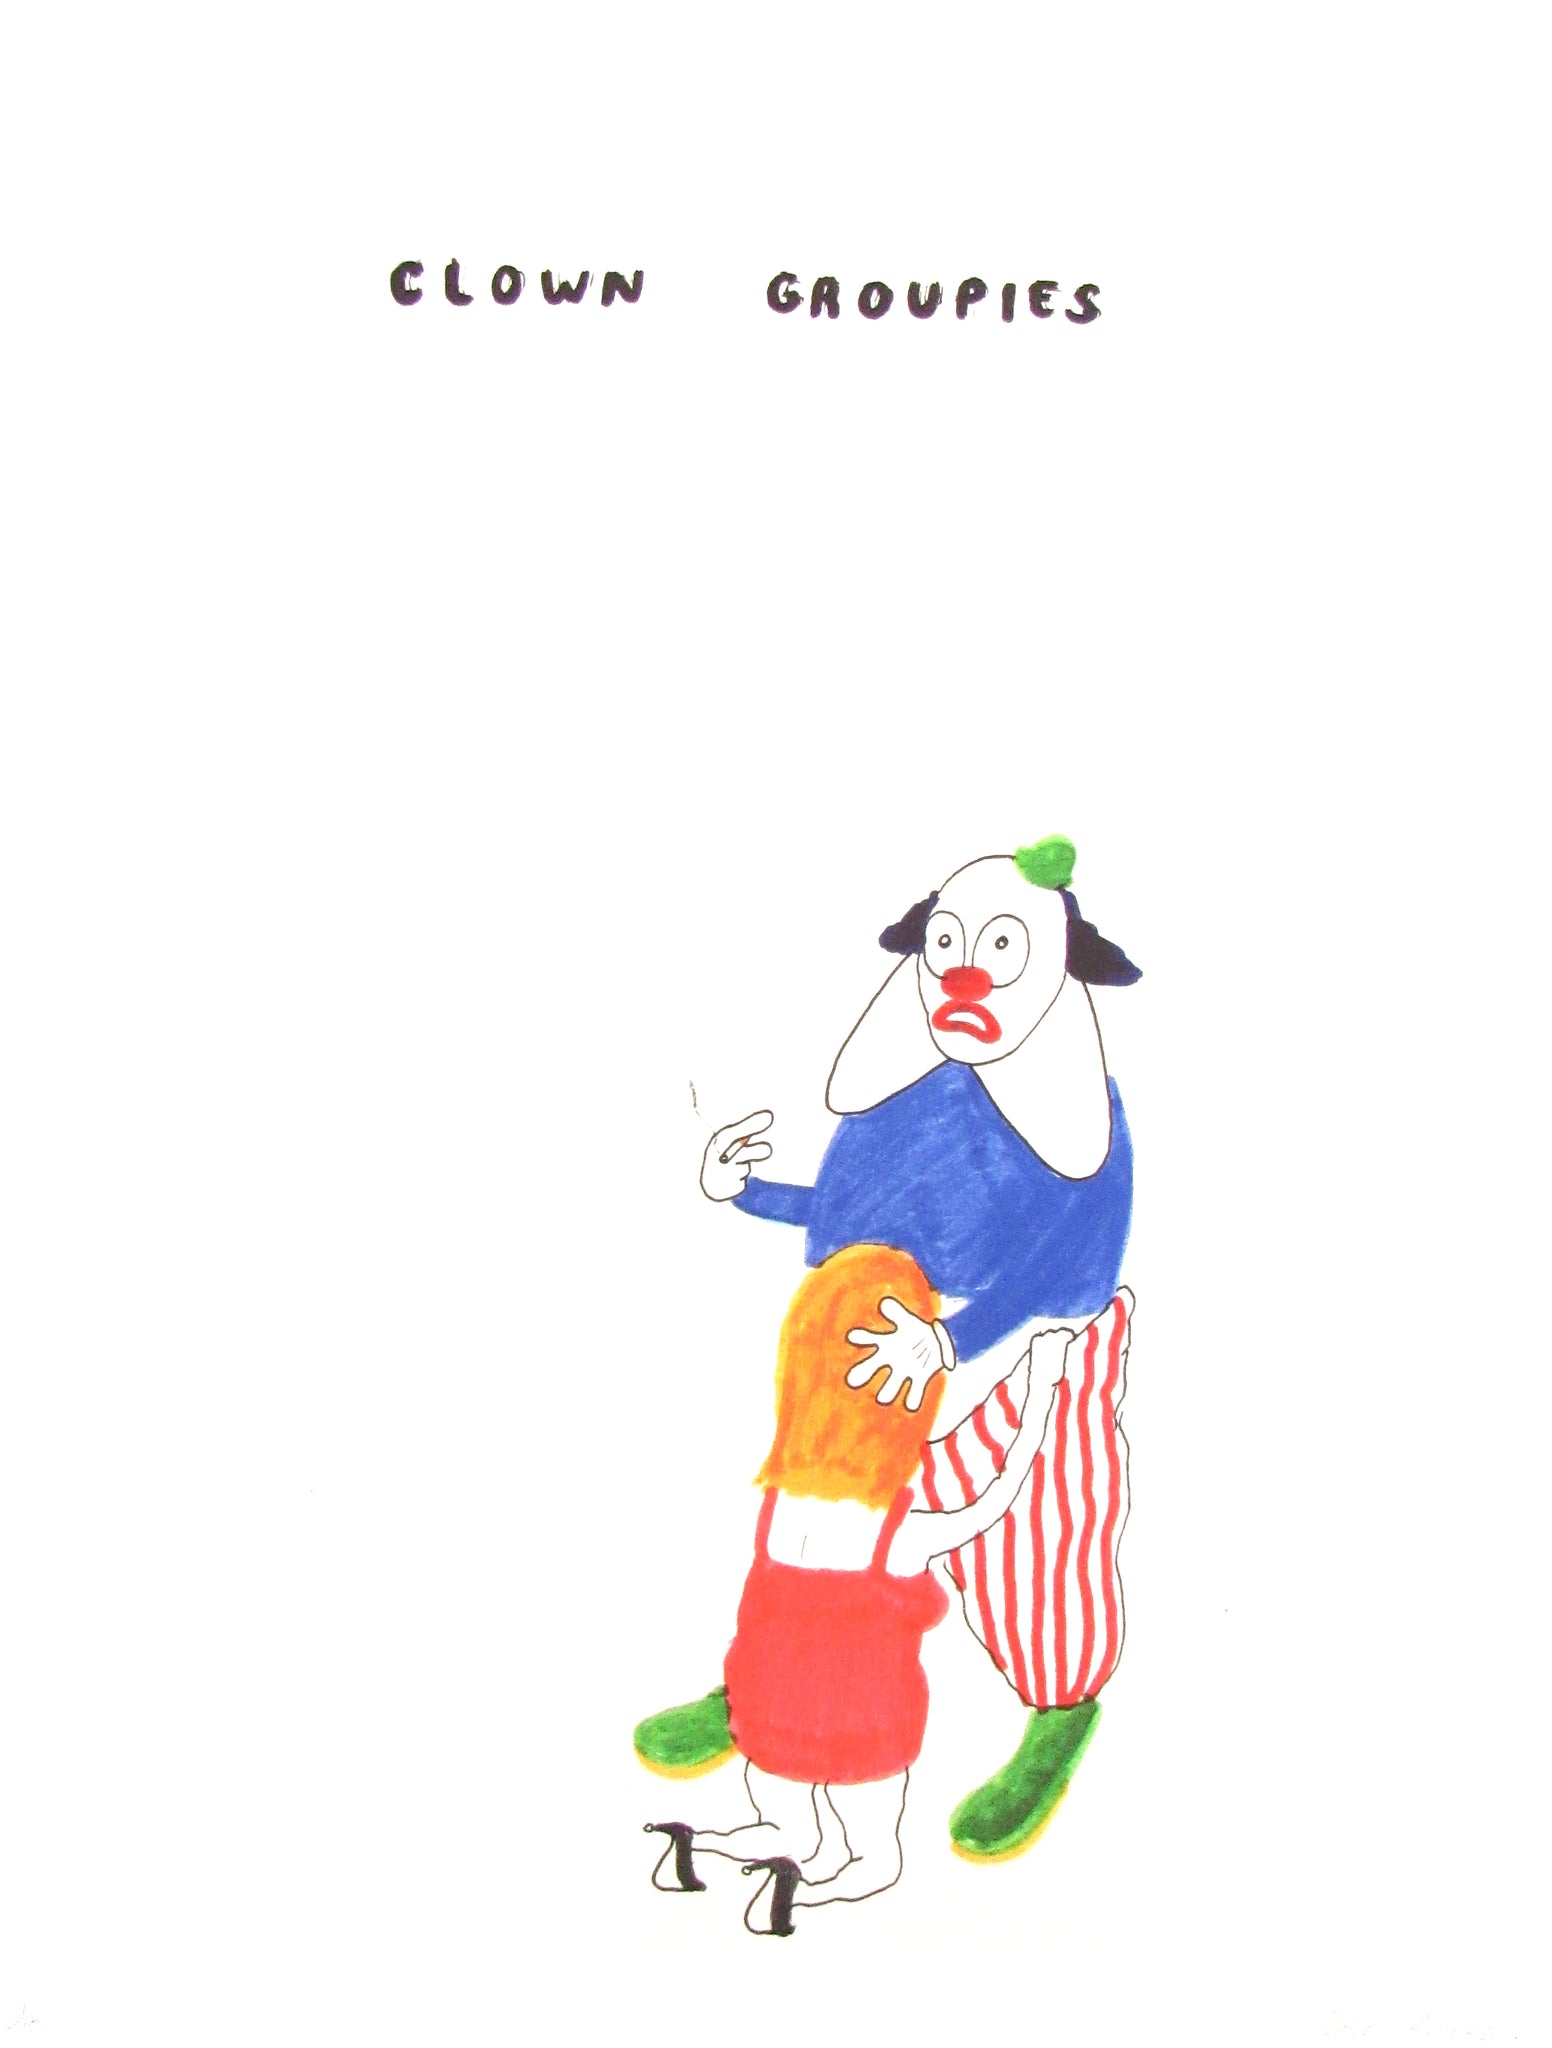 Clown Groupies